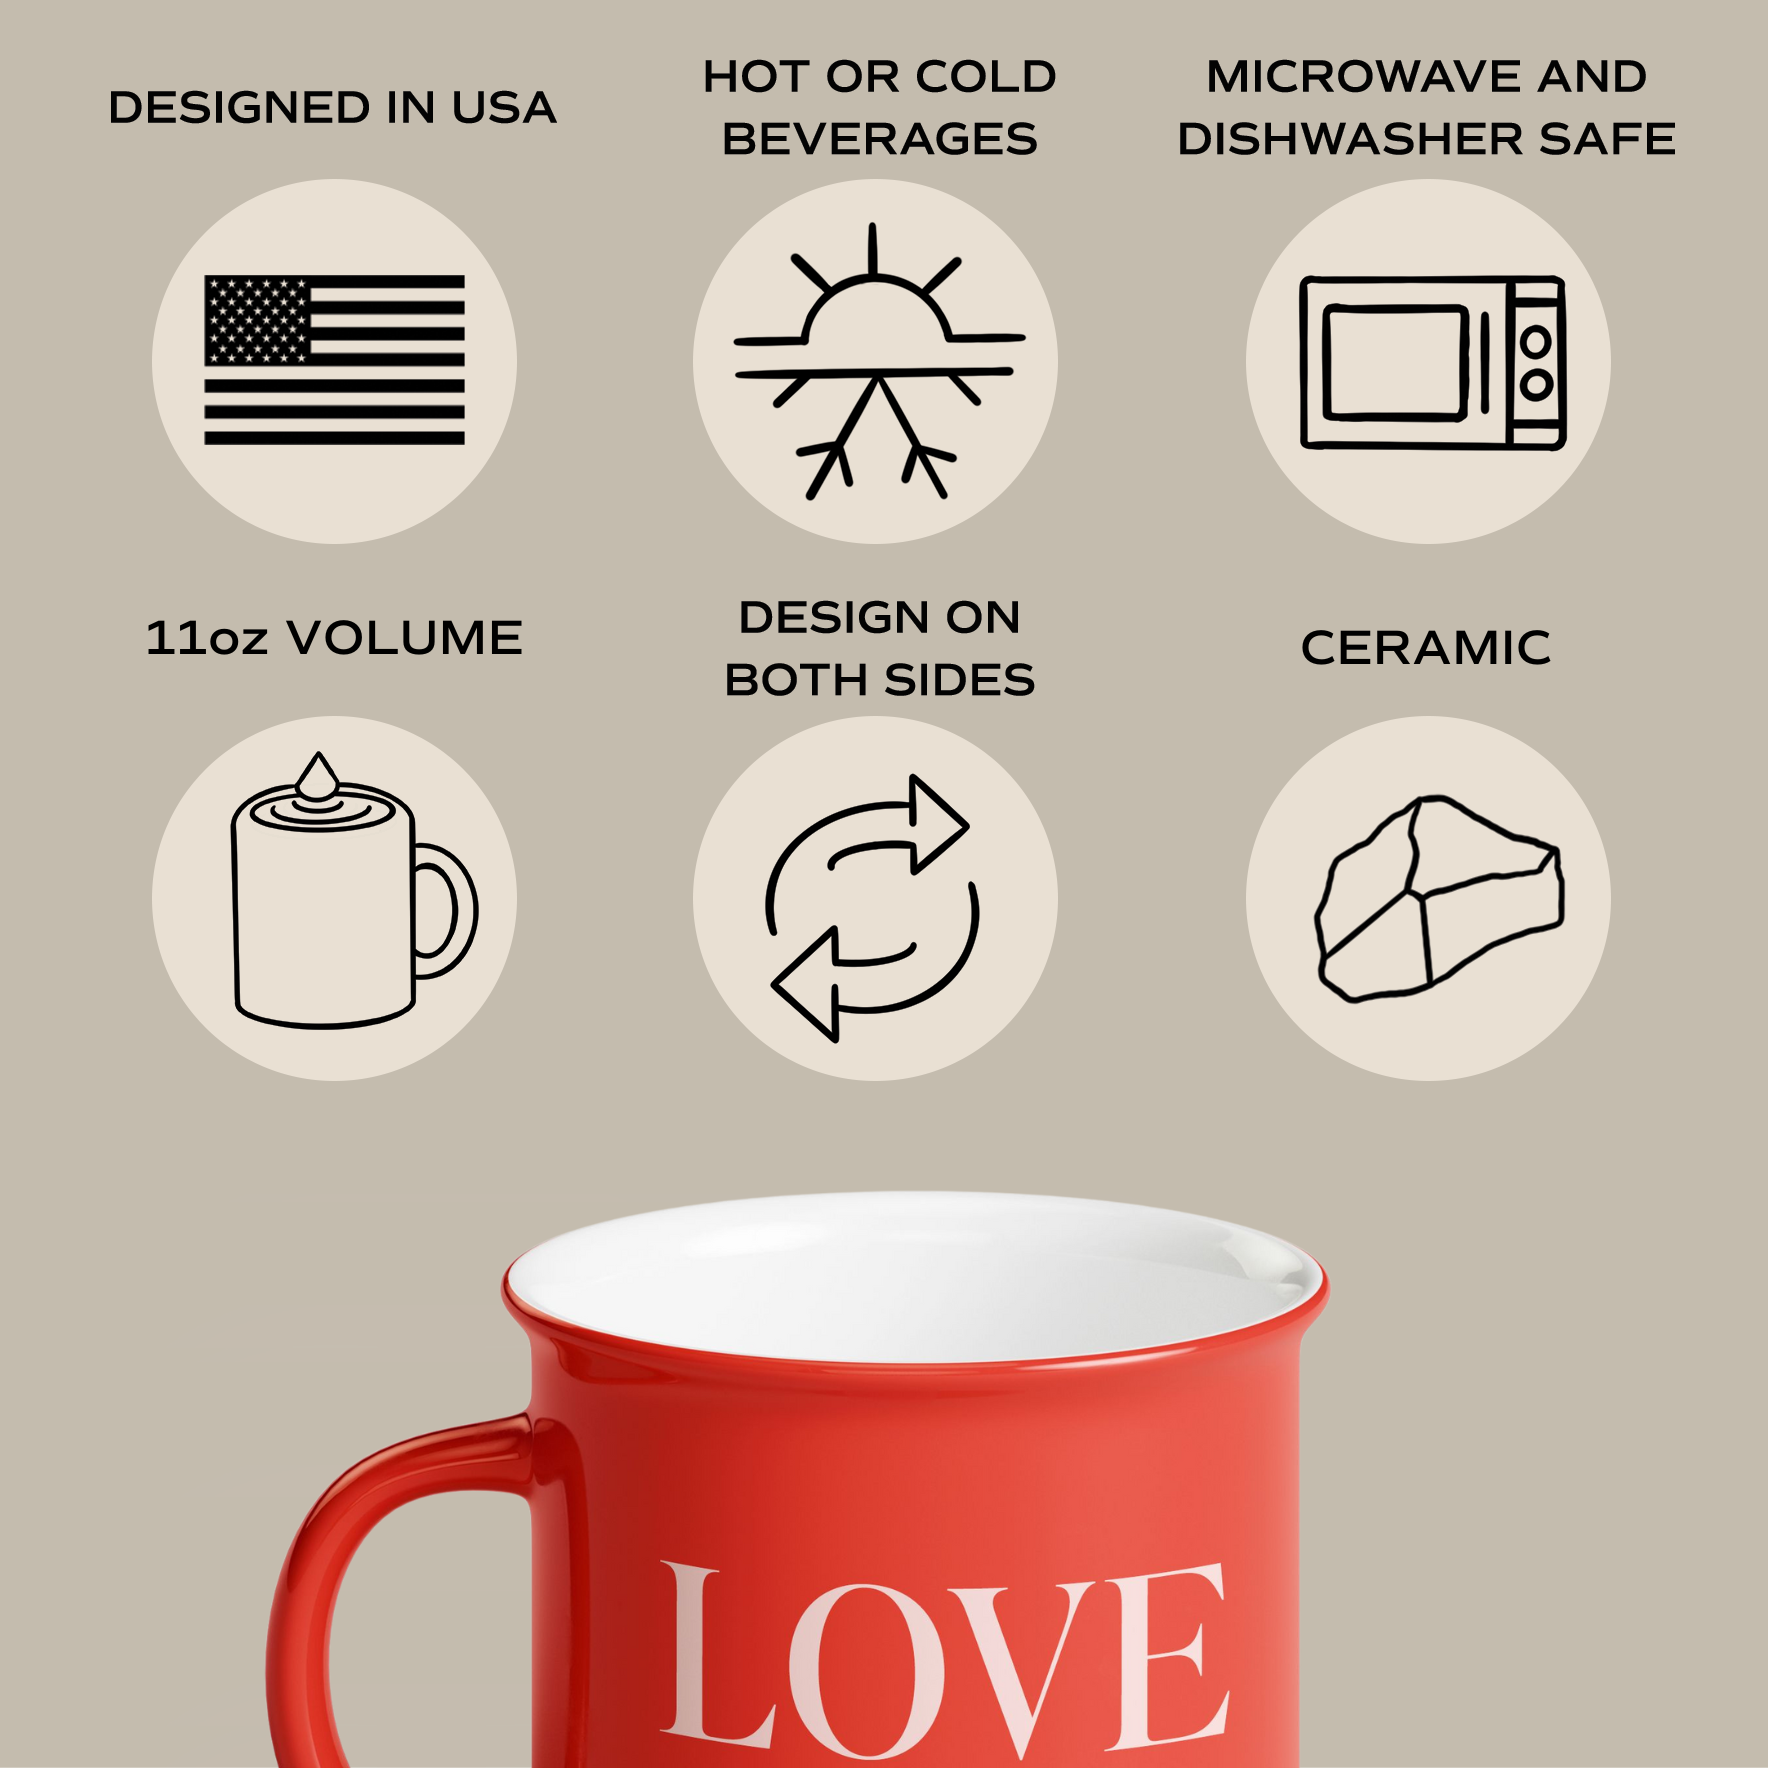 Love You Campfire Coffee Mug